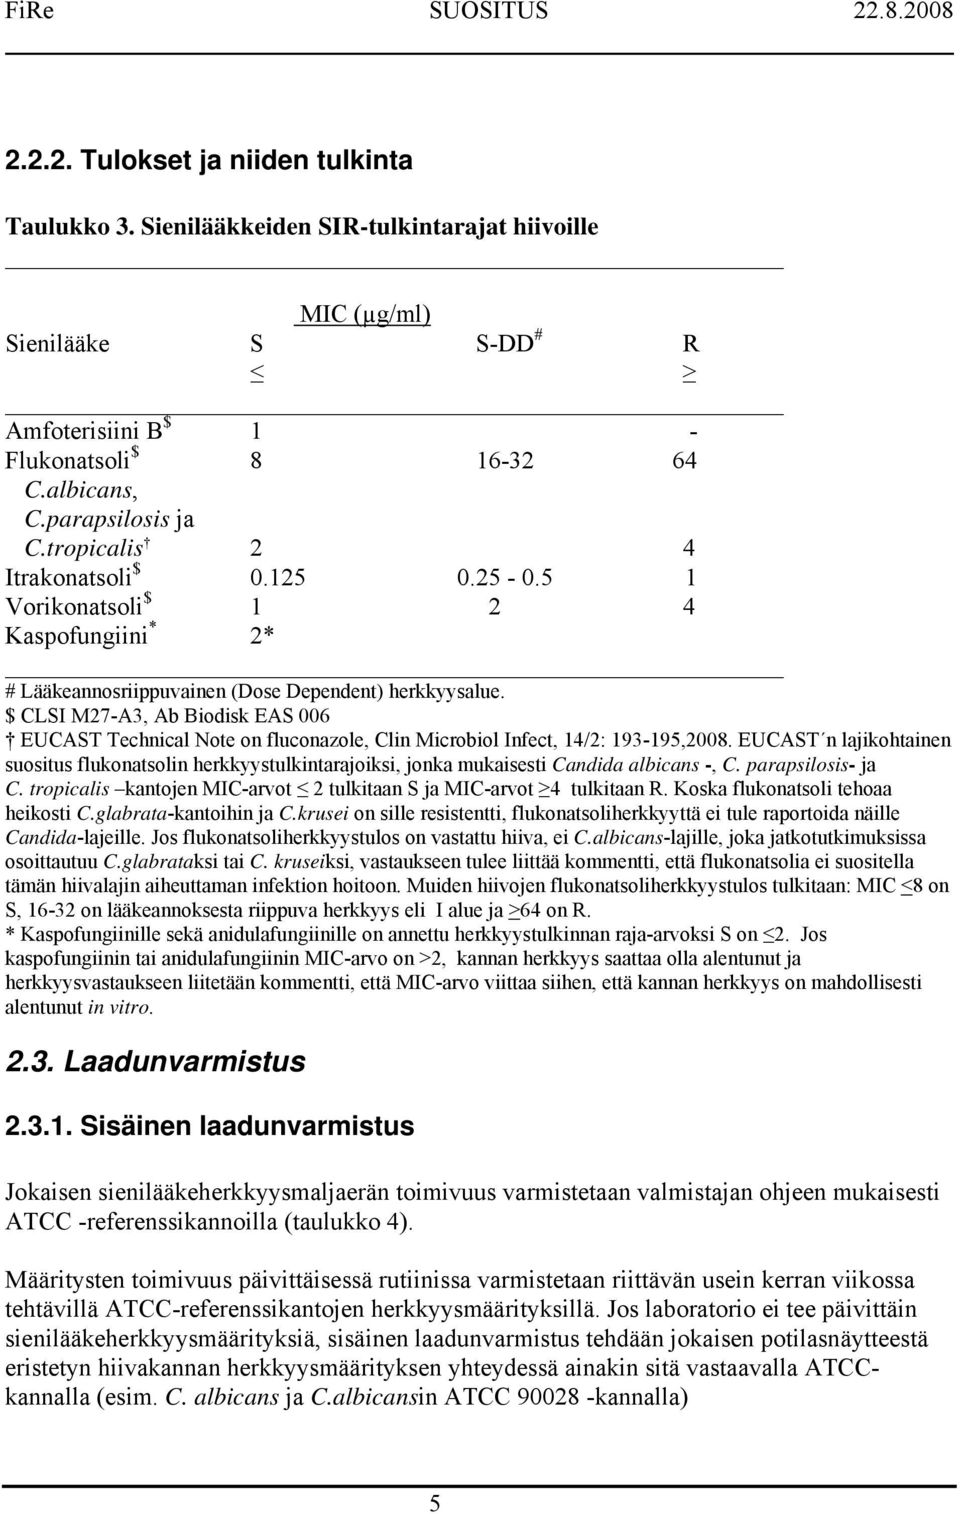 $ CLSI M27-A3, Ab Biodisk EAS 006 EUCAST Technical Note on fluconazole, Clin Microbiol Infect, 14/2: 193-195,2008.